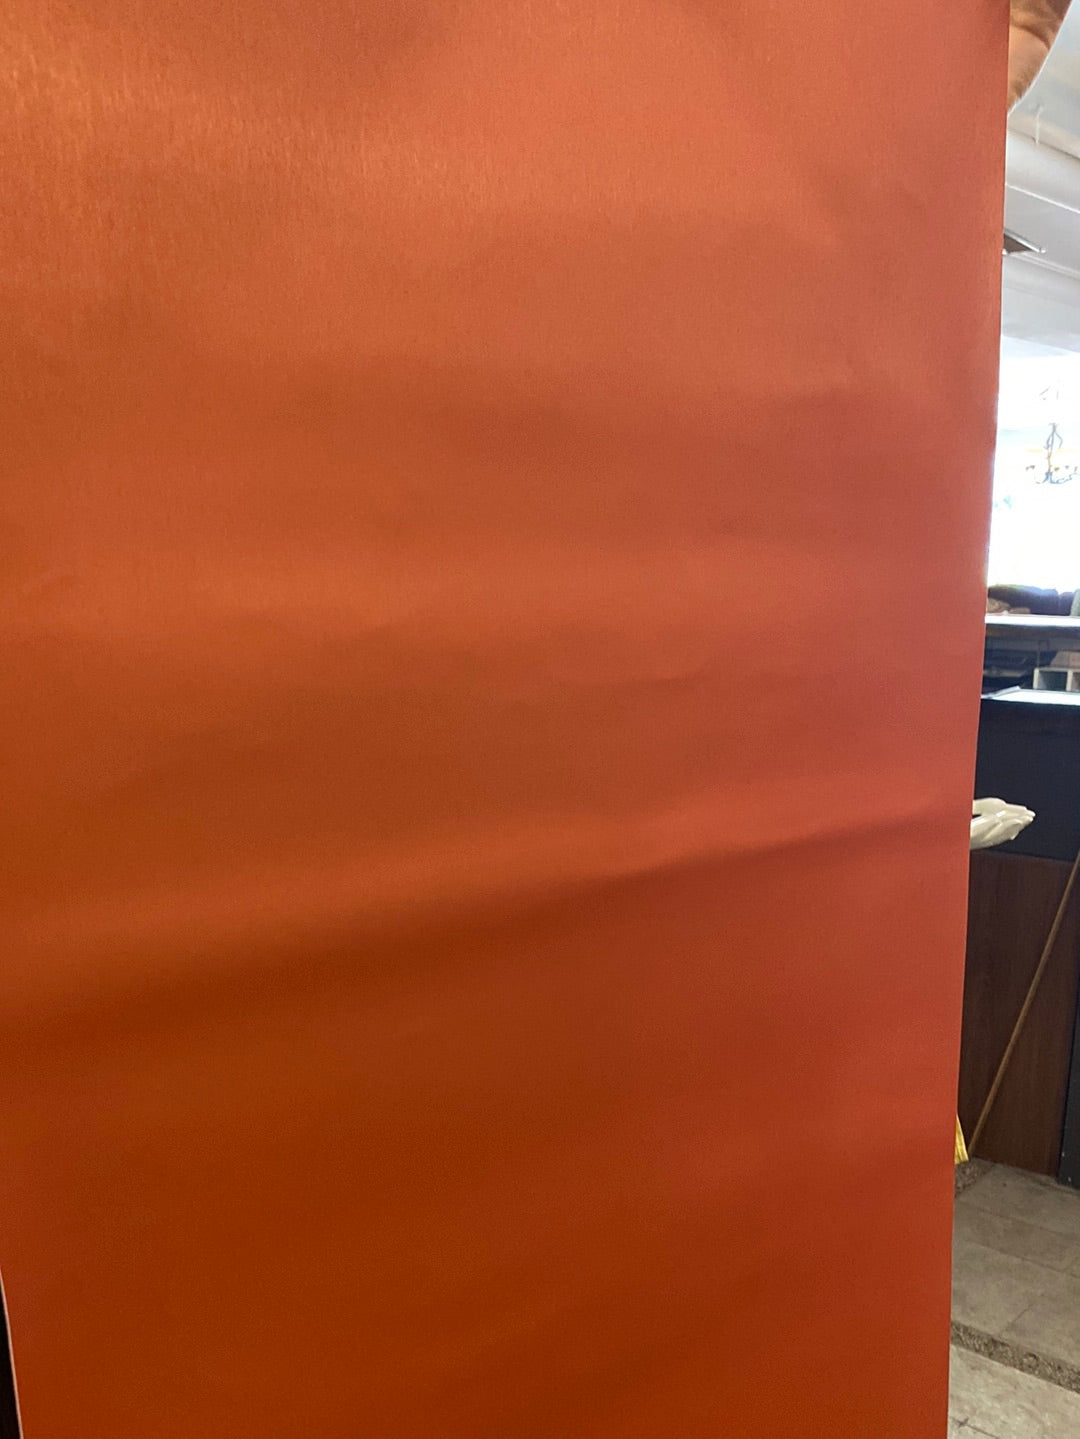 Red-orange Upholstery Fabric